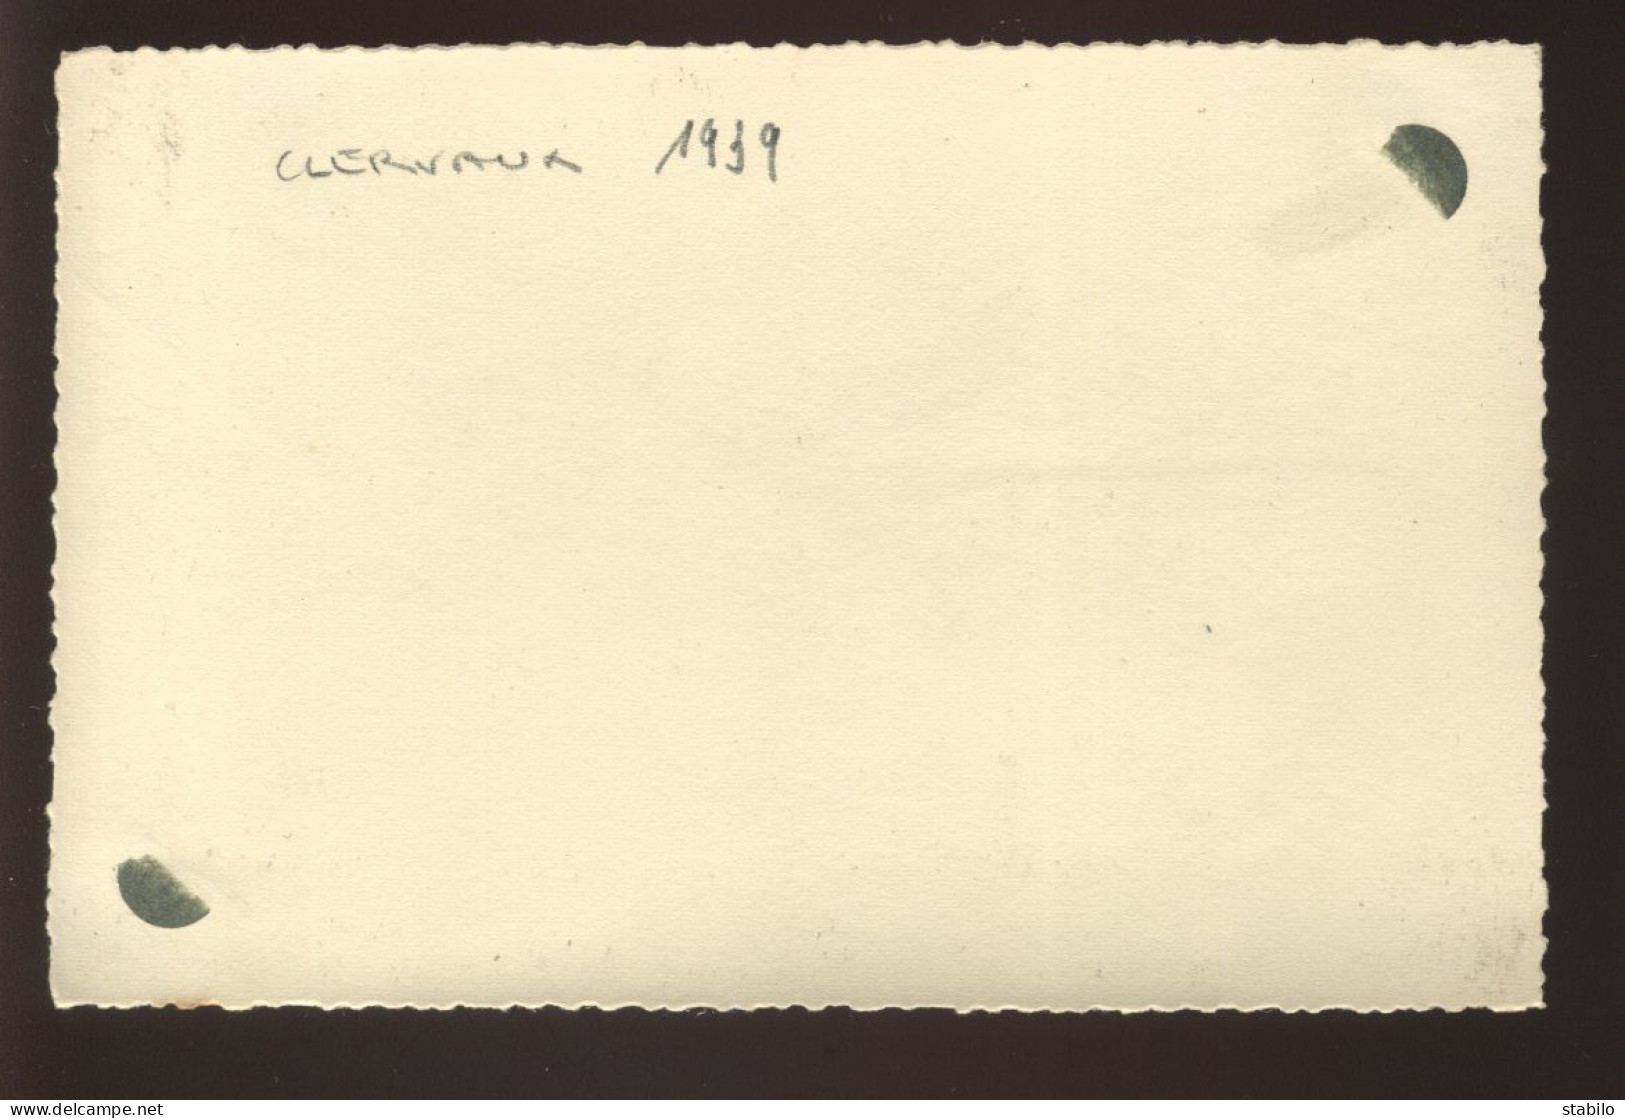 LUXEMBOURG - CLERVAUX - 1939 - FORMAT 13.5 X 8.8 CM - Places